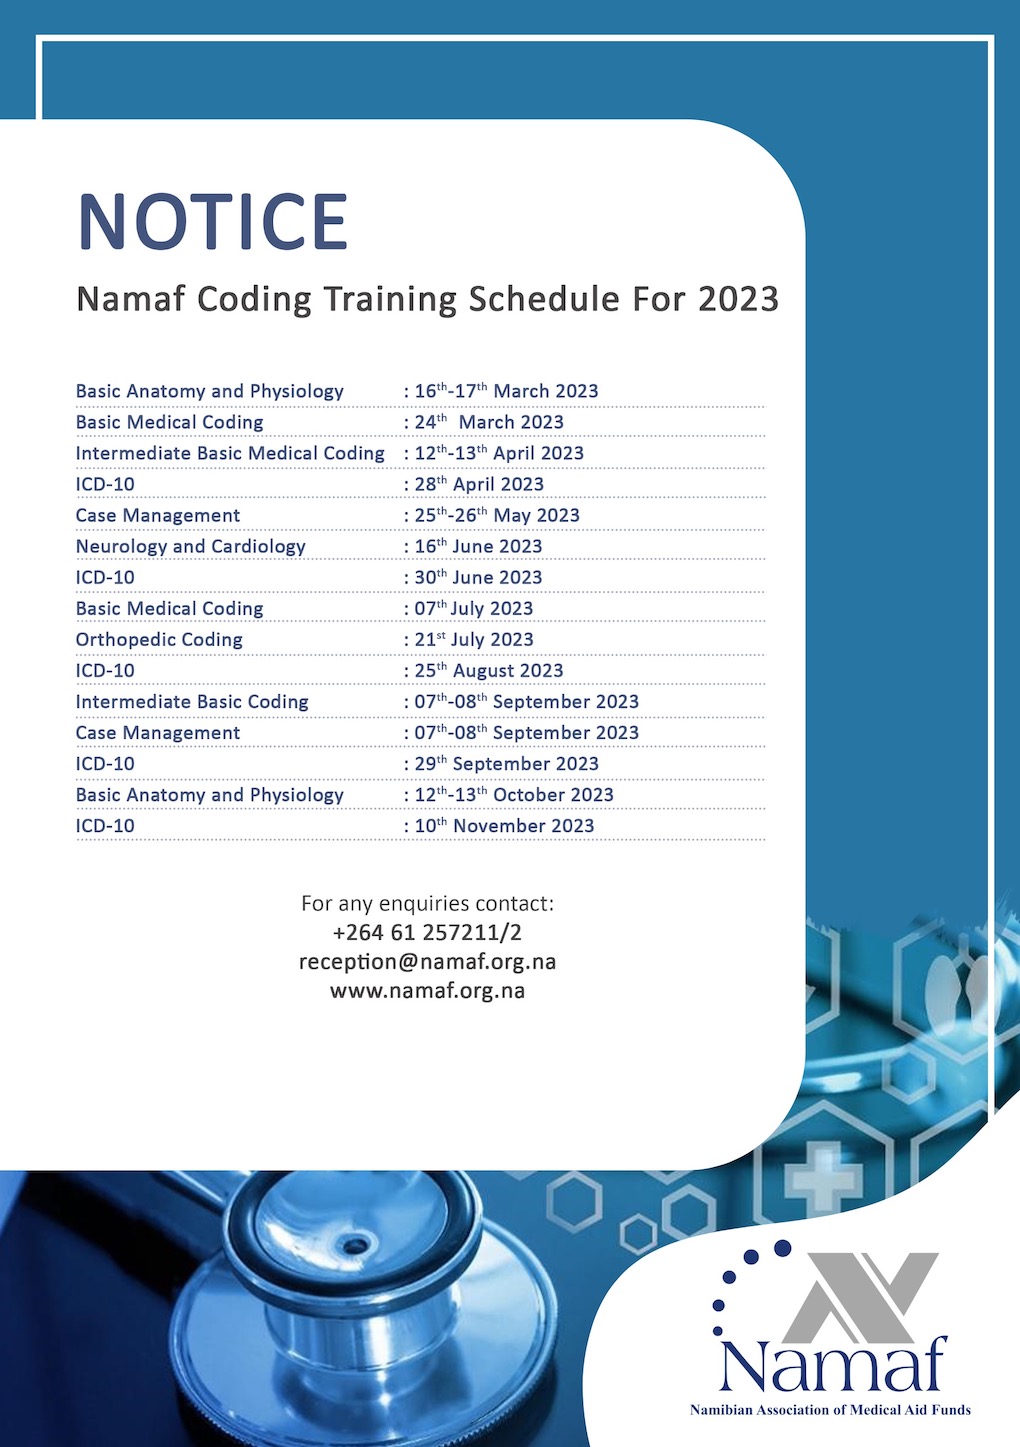 NAMAF Coding Notice Schedule 2023